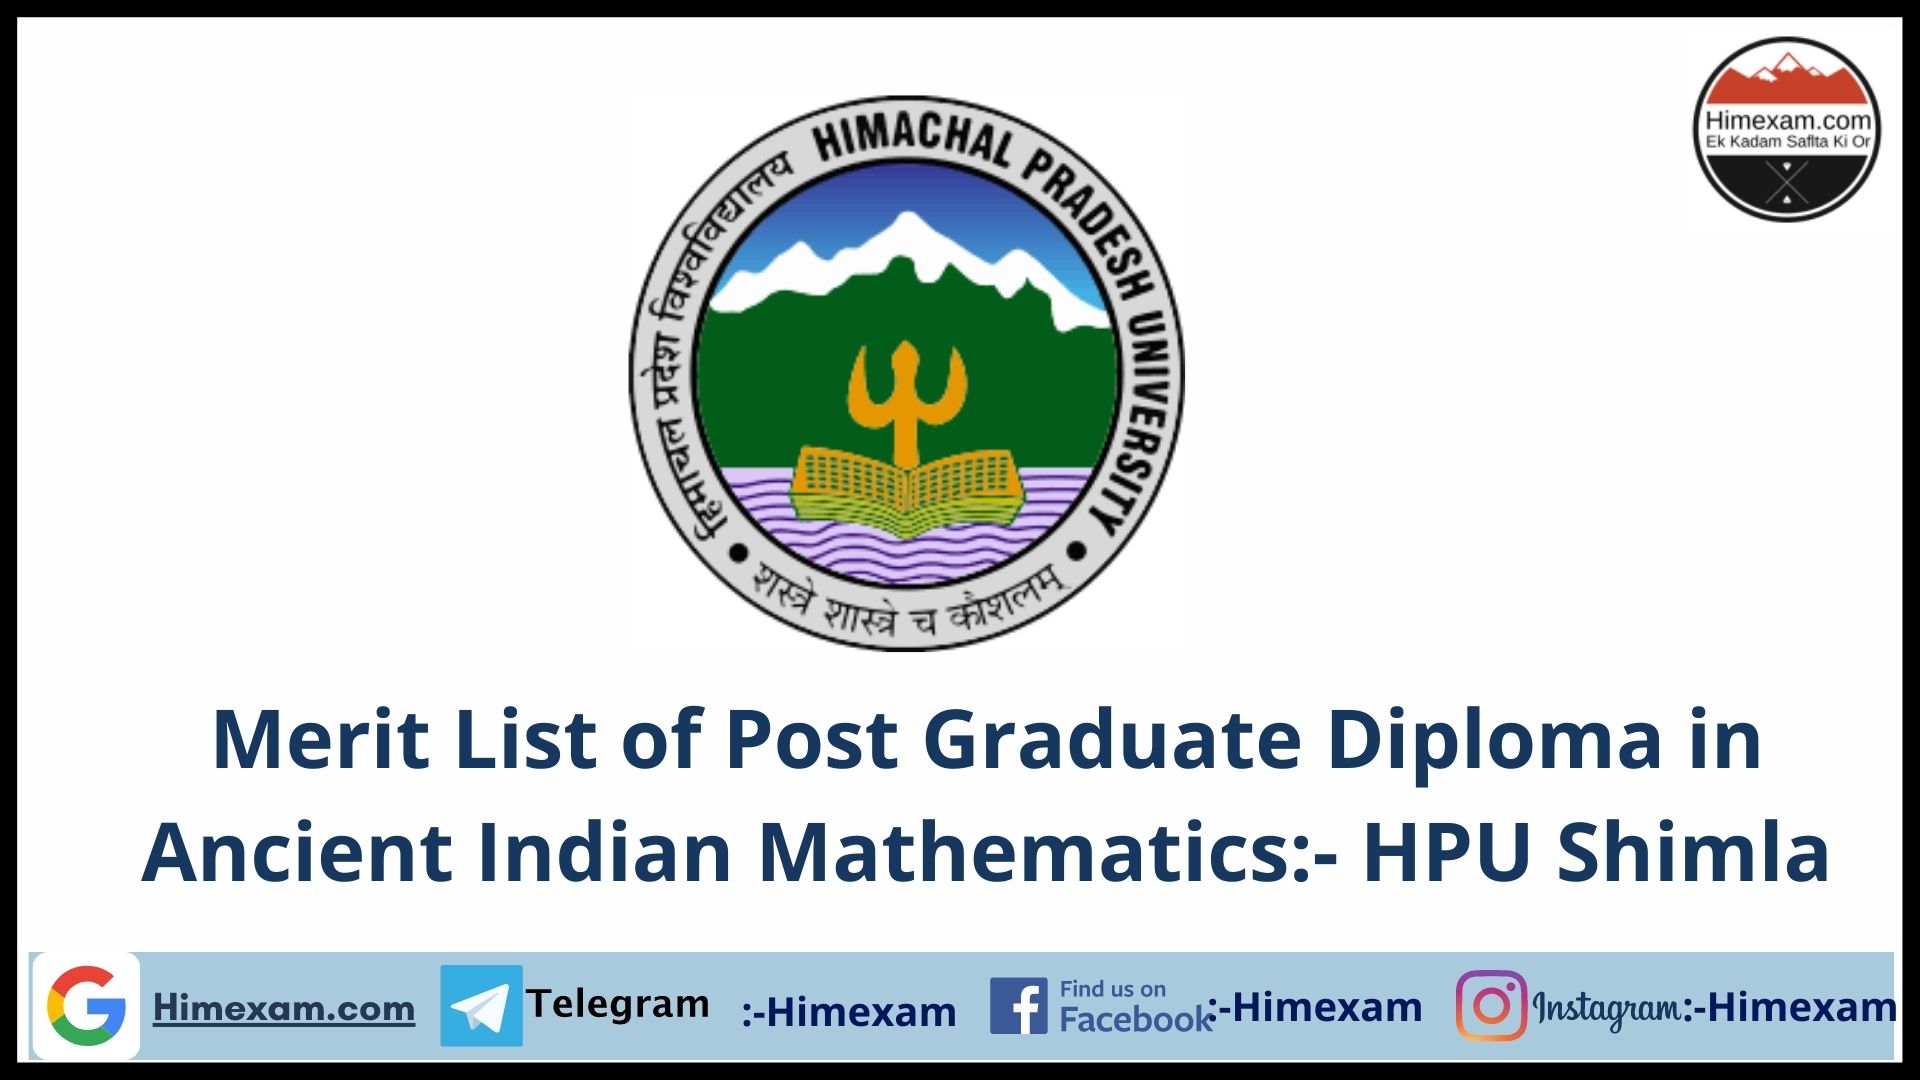 Merit List of Post Graduate Diploma in Ancient Indian Mathematics:- HPU Shimla